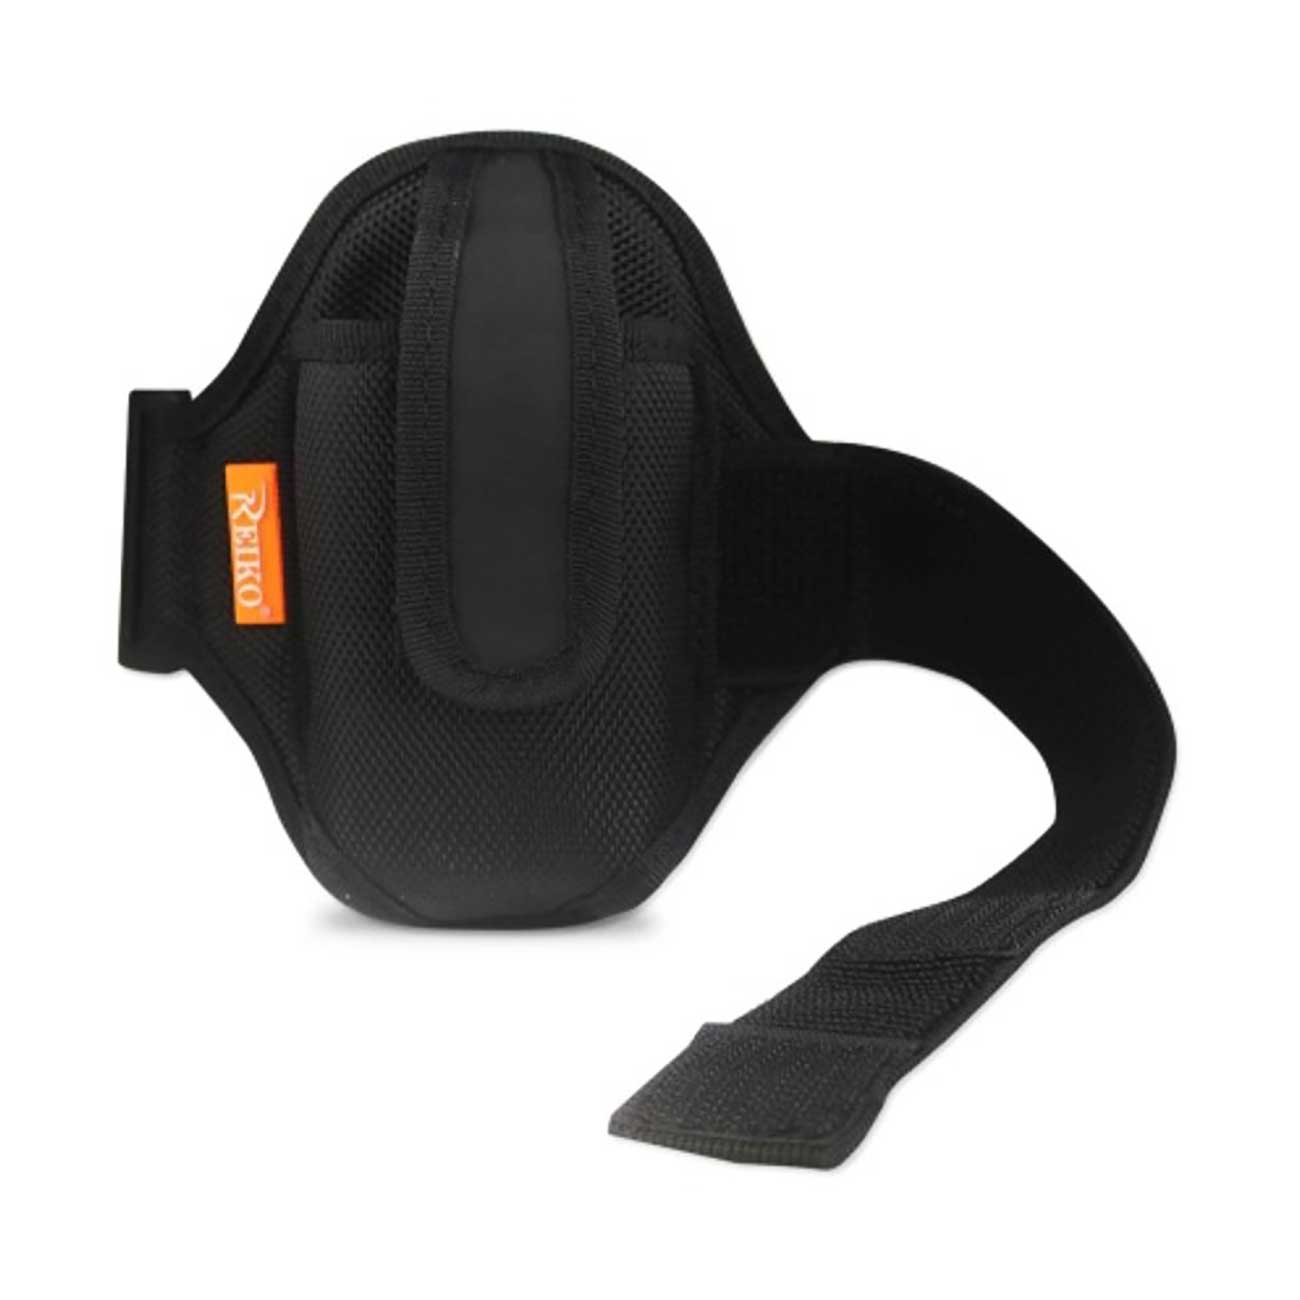 Black around the wrist carry case fits Alcatel Go Flip 3 - image 1 of 3